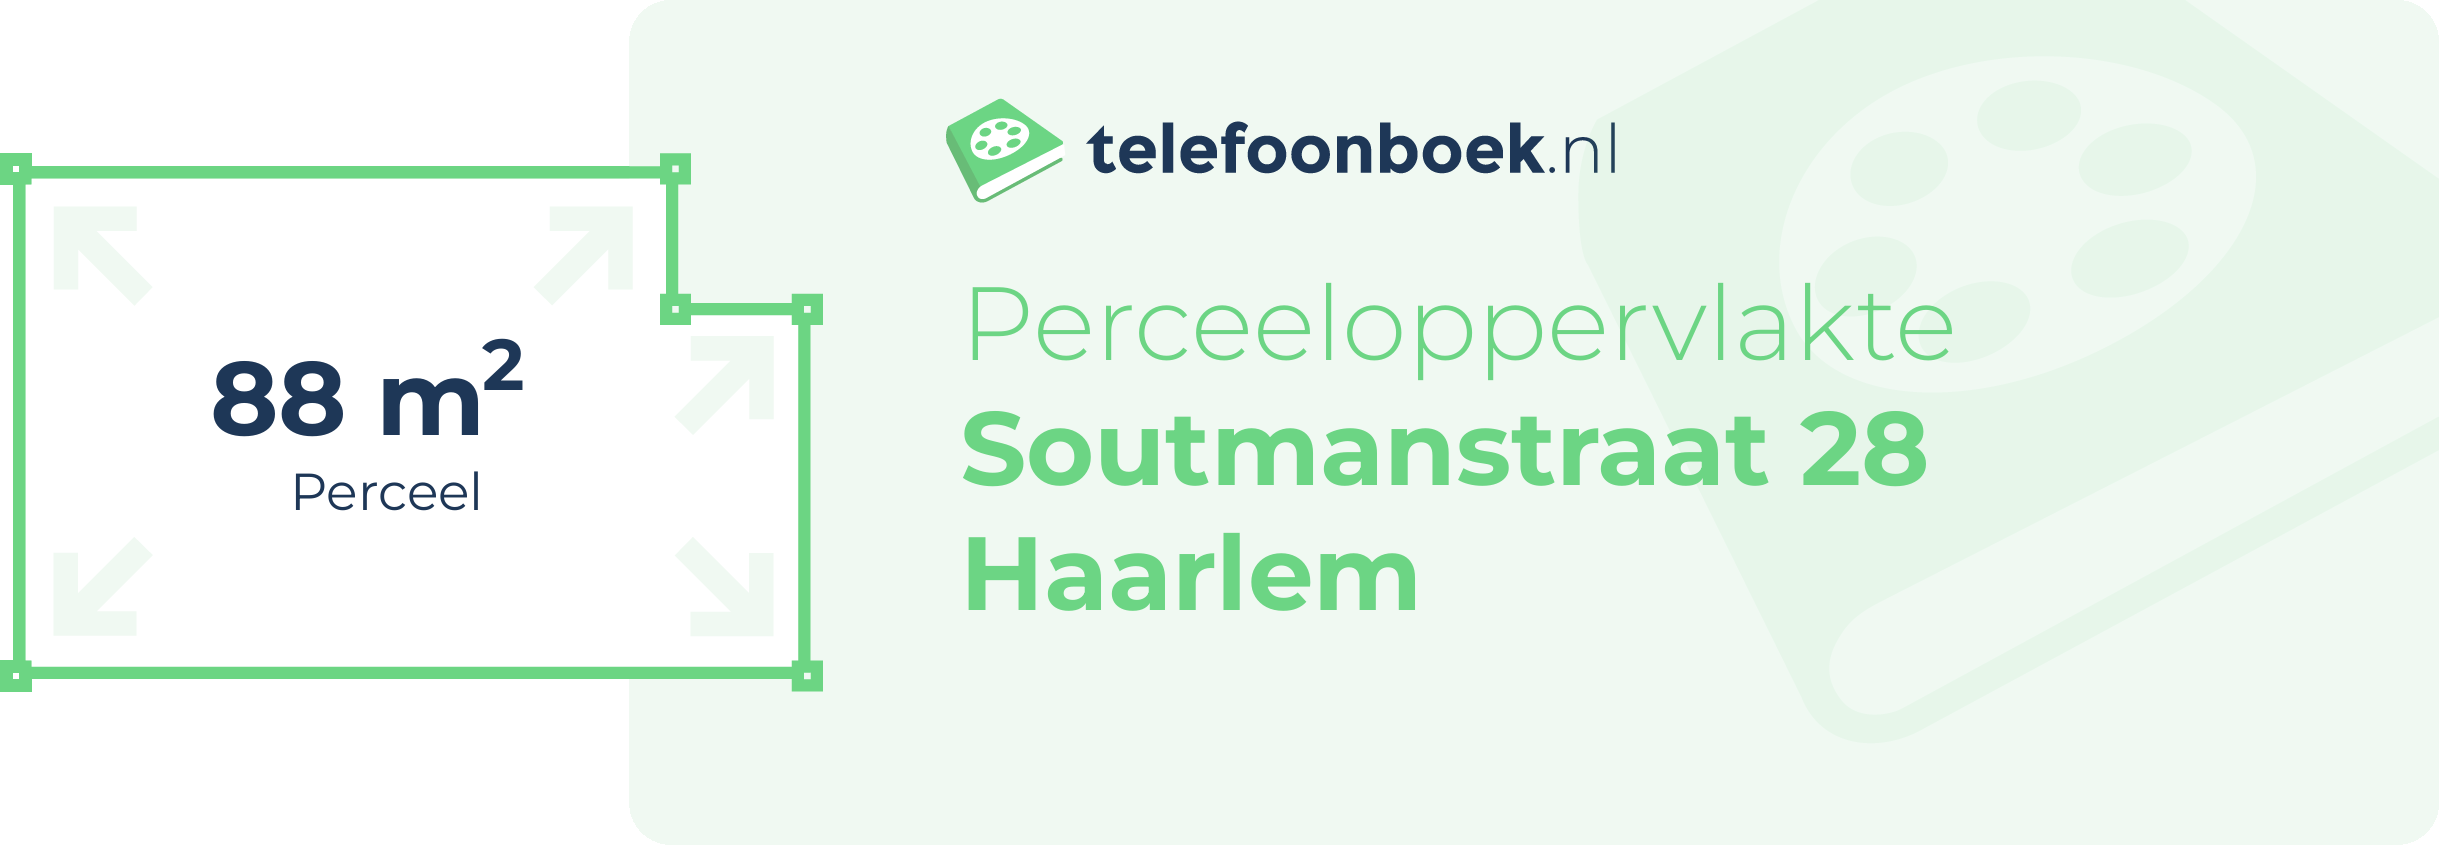 Perceeloppervlakte Soutmanstraat 28 Haarlem